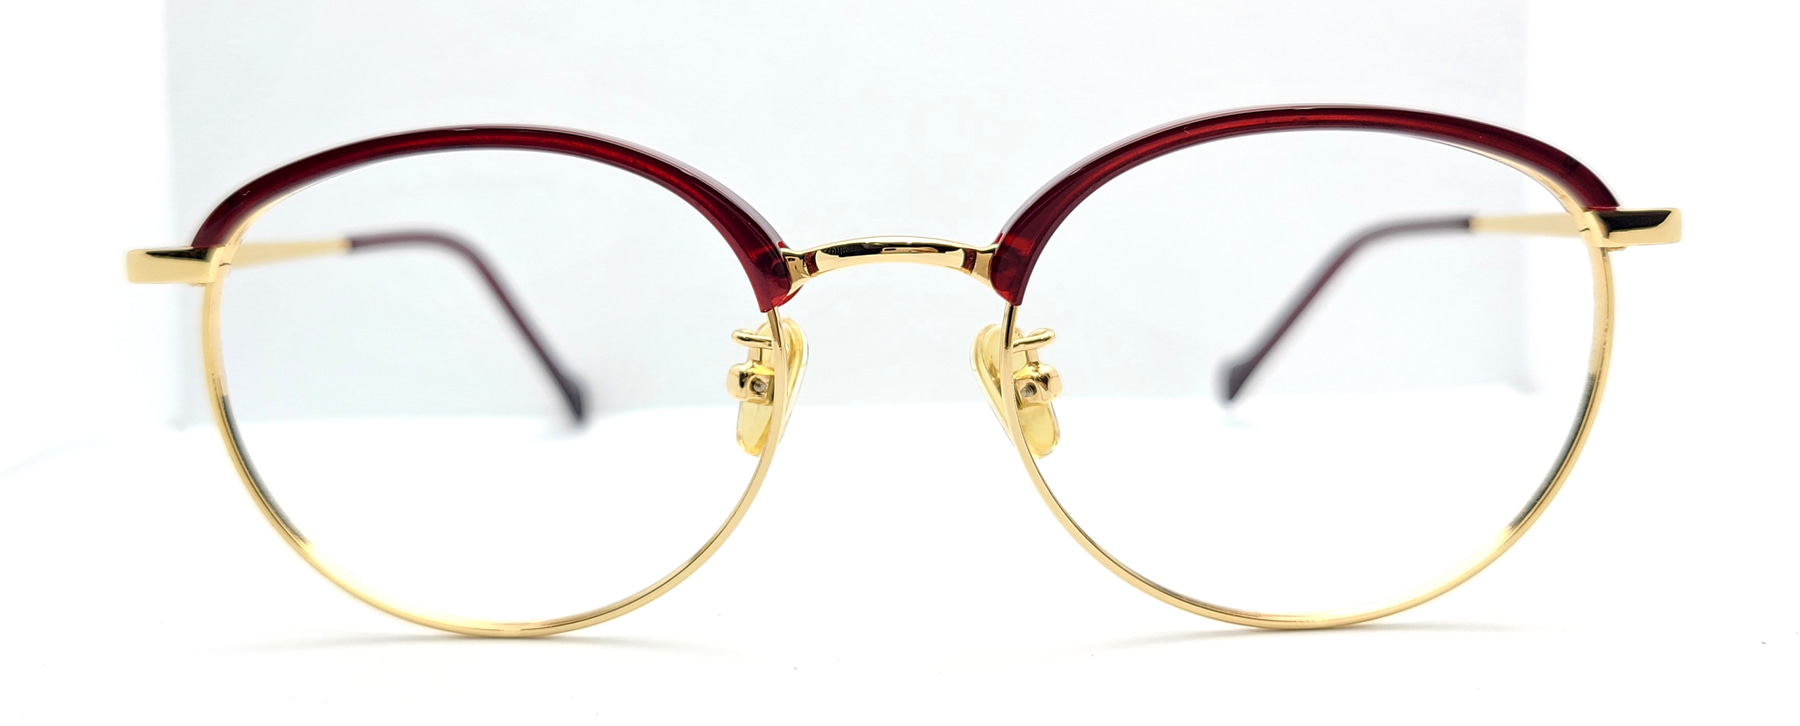 MINIHOUSE M-3013, Korean glasses, sunglasses, eyeglasses, glasses